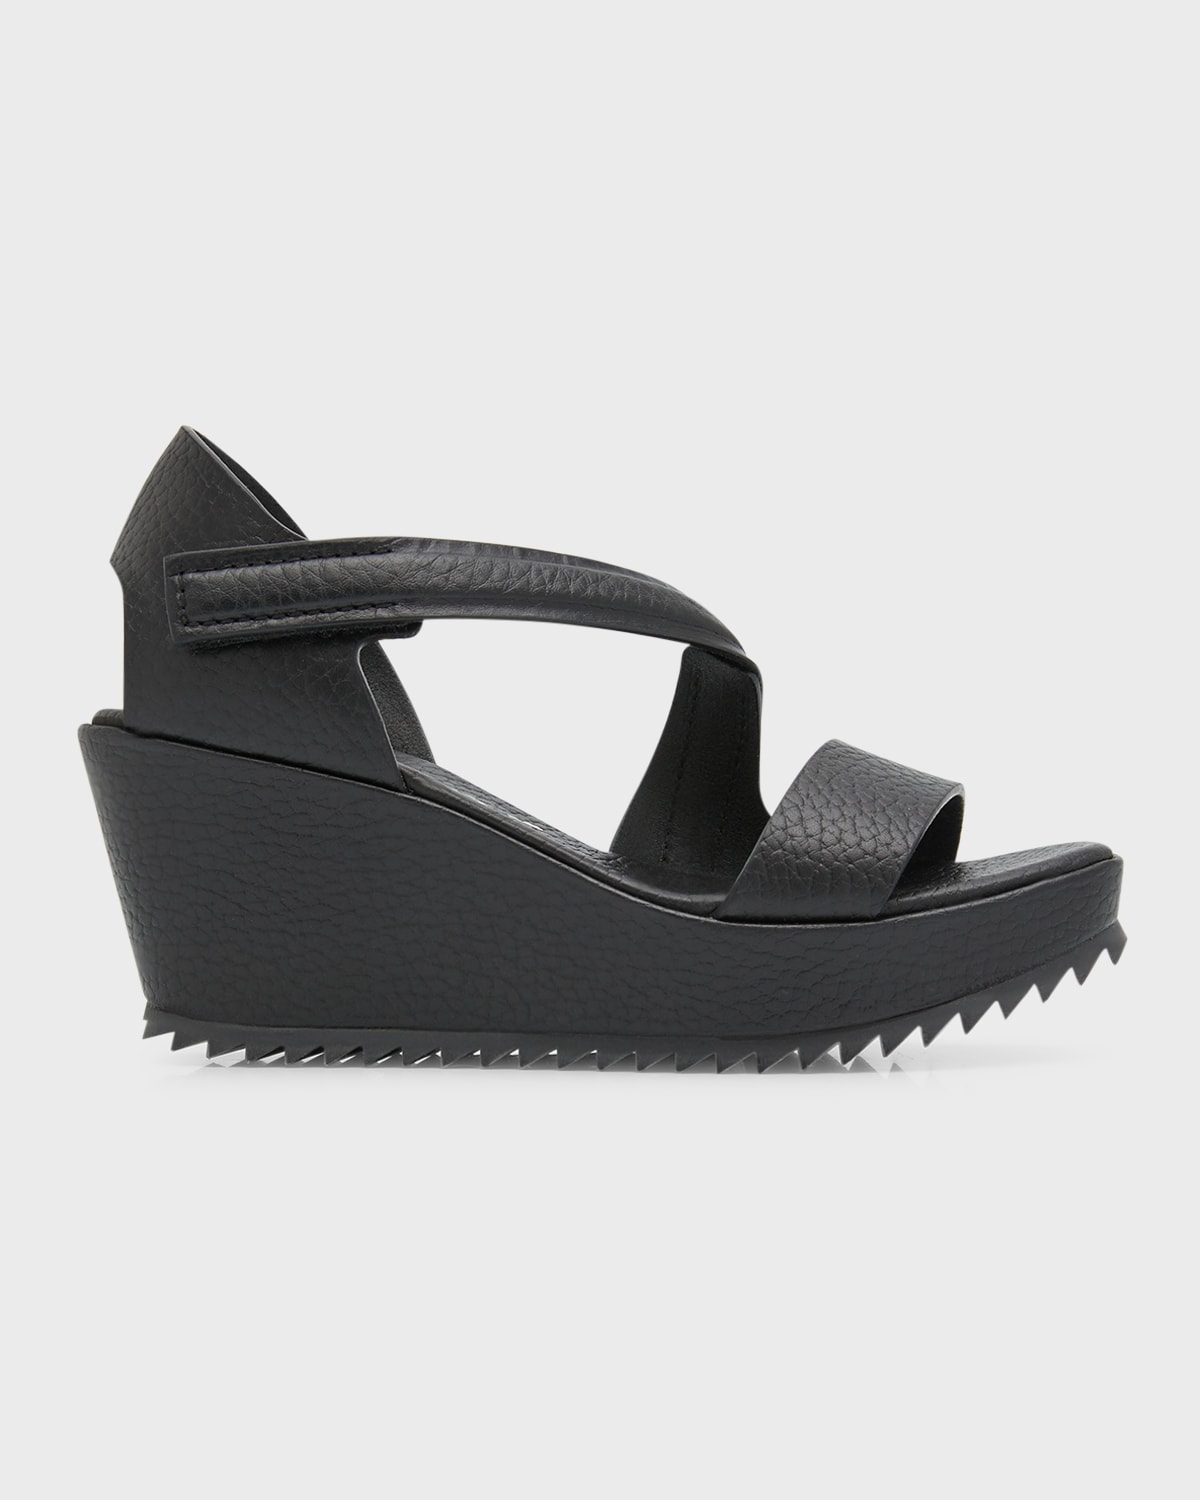 Prada Quilted Leather Platform Sandals | Neiman Marcus